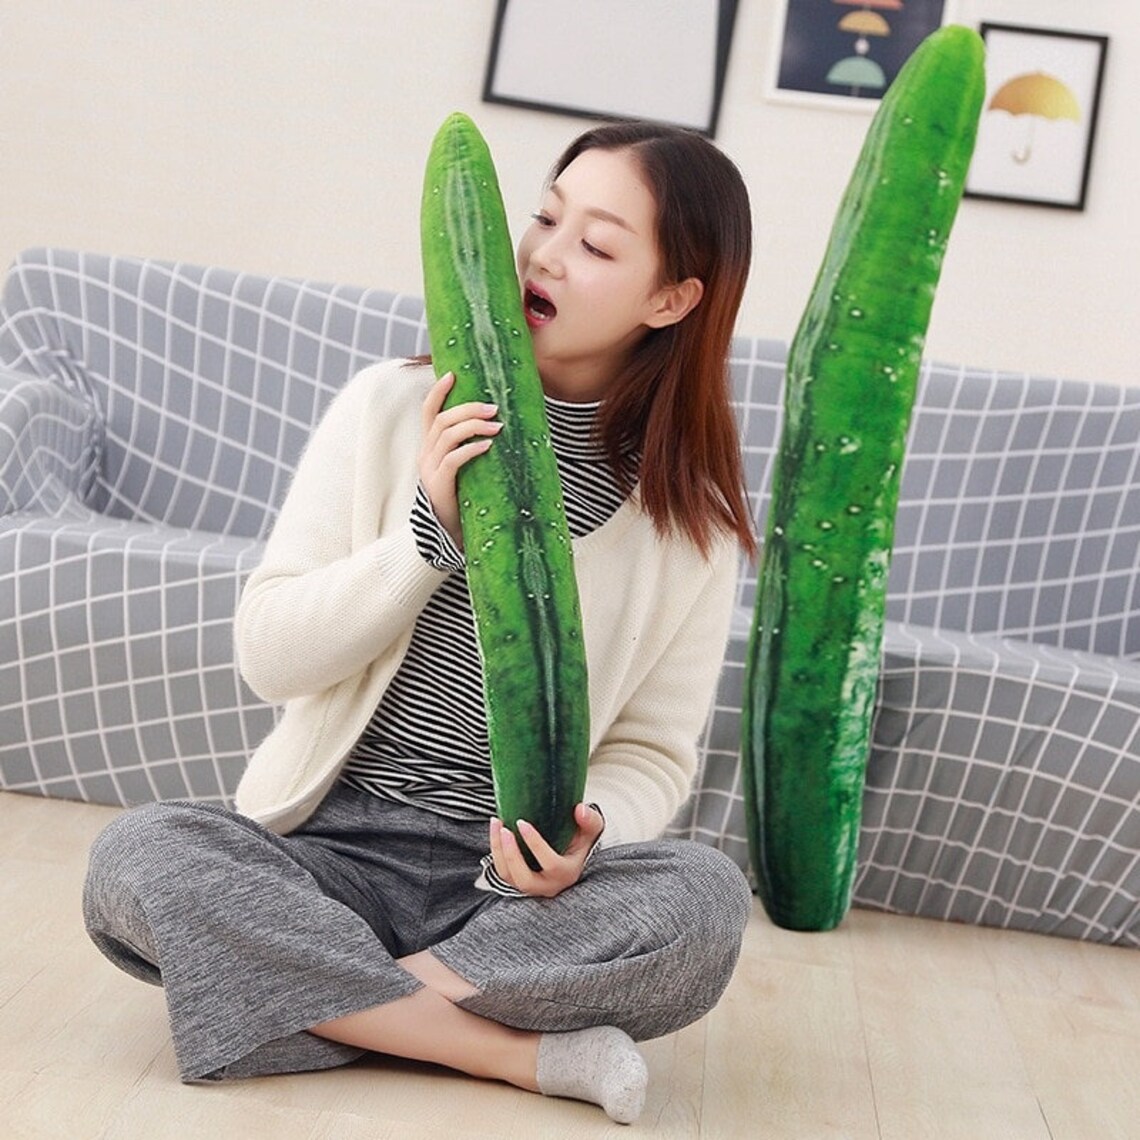 Huge Funny Simulation Cucumber Plush Toy Stuffed Cucumber Etsy